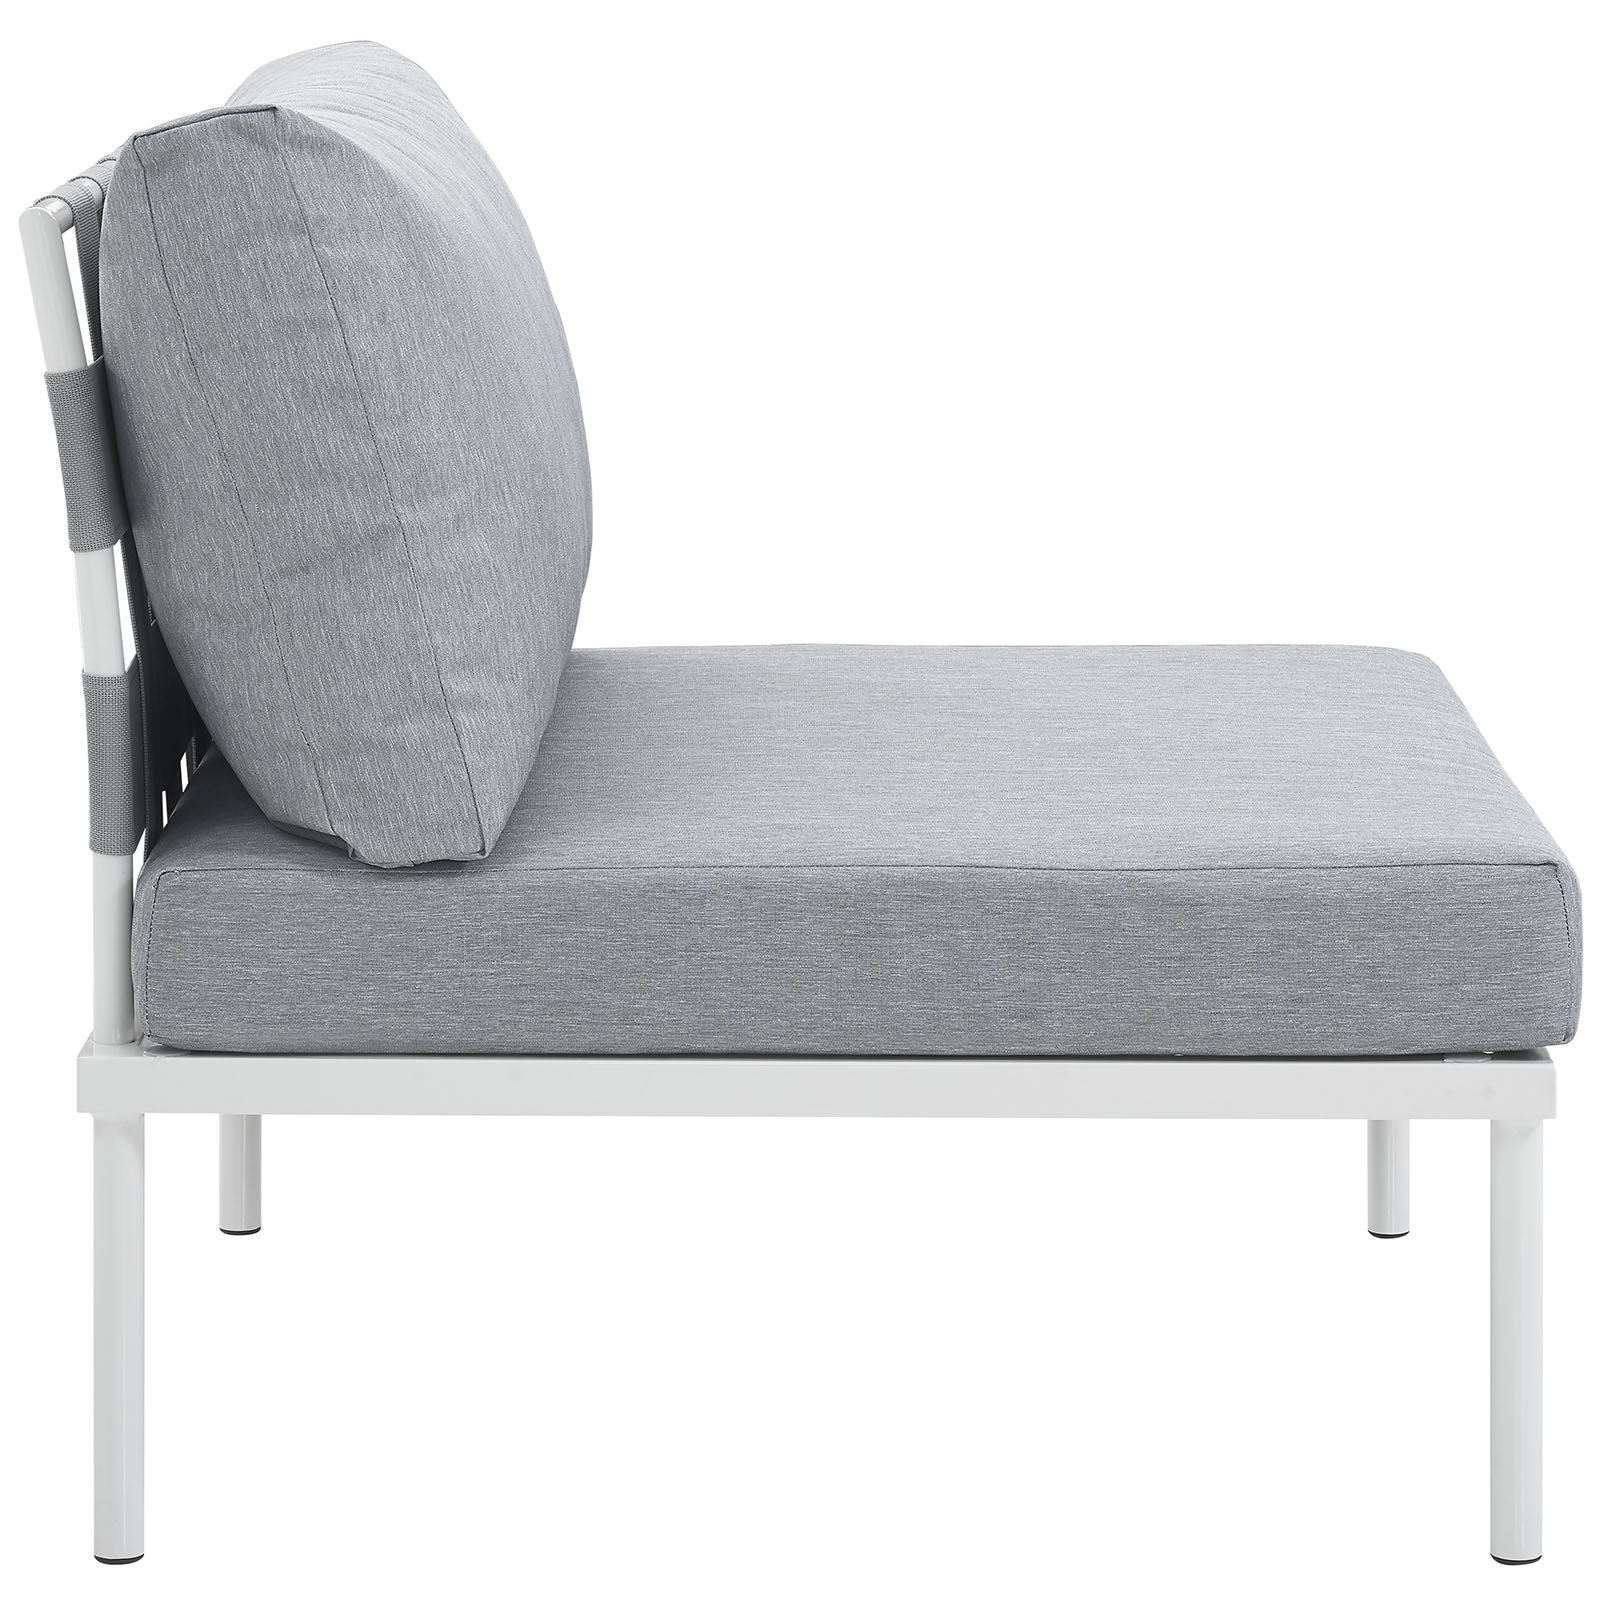 Modern Contemporary Urban Design Outdoor Patio Balcony Lounge Chair, Grey White Gray, Rattan - image 3 of 5